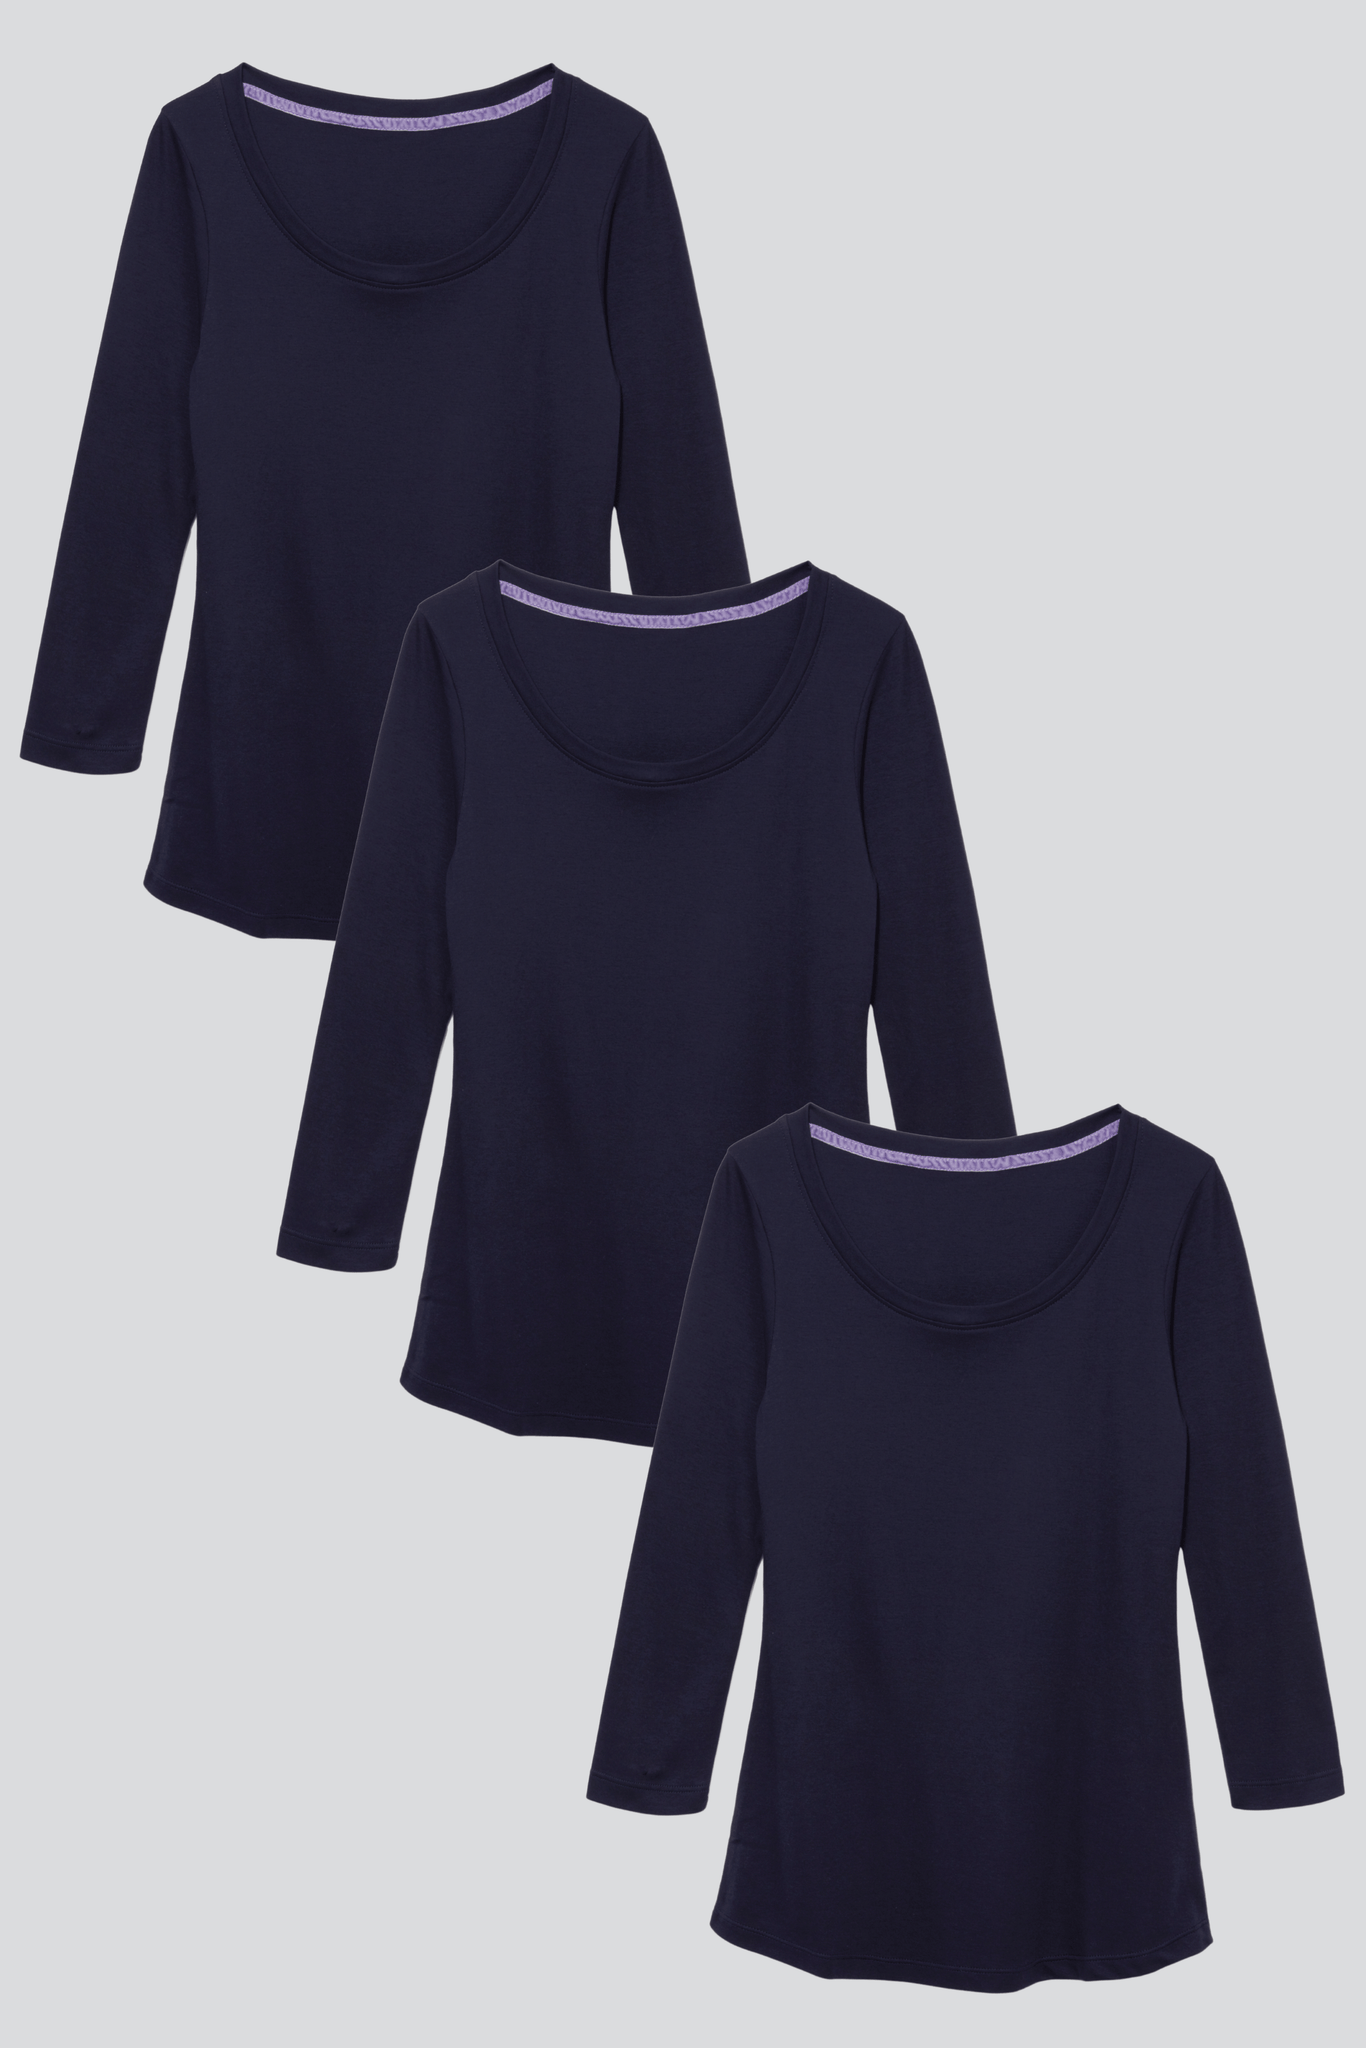 3/4 Sleeve Scoop Neck Cotton Modal Blend T-shirt Bundle 3/4 Sleeve T-shirt Lavender Hill Clothing